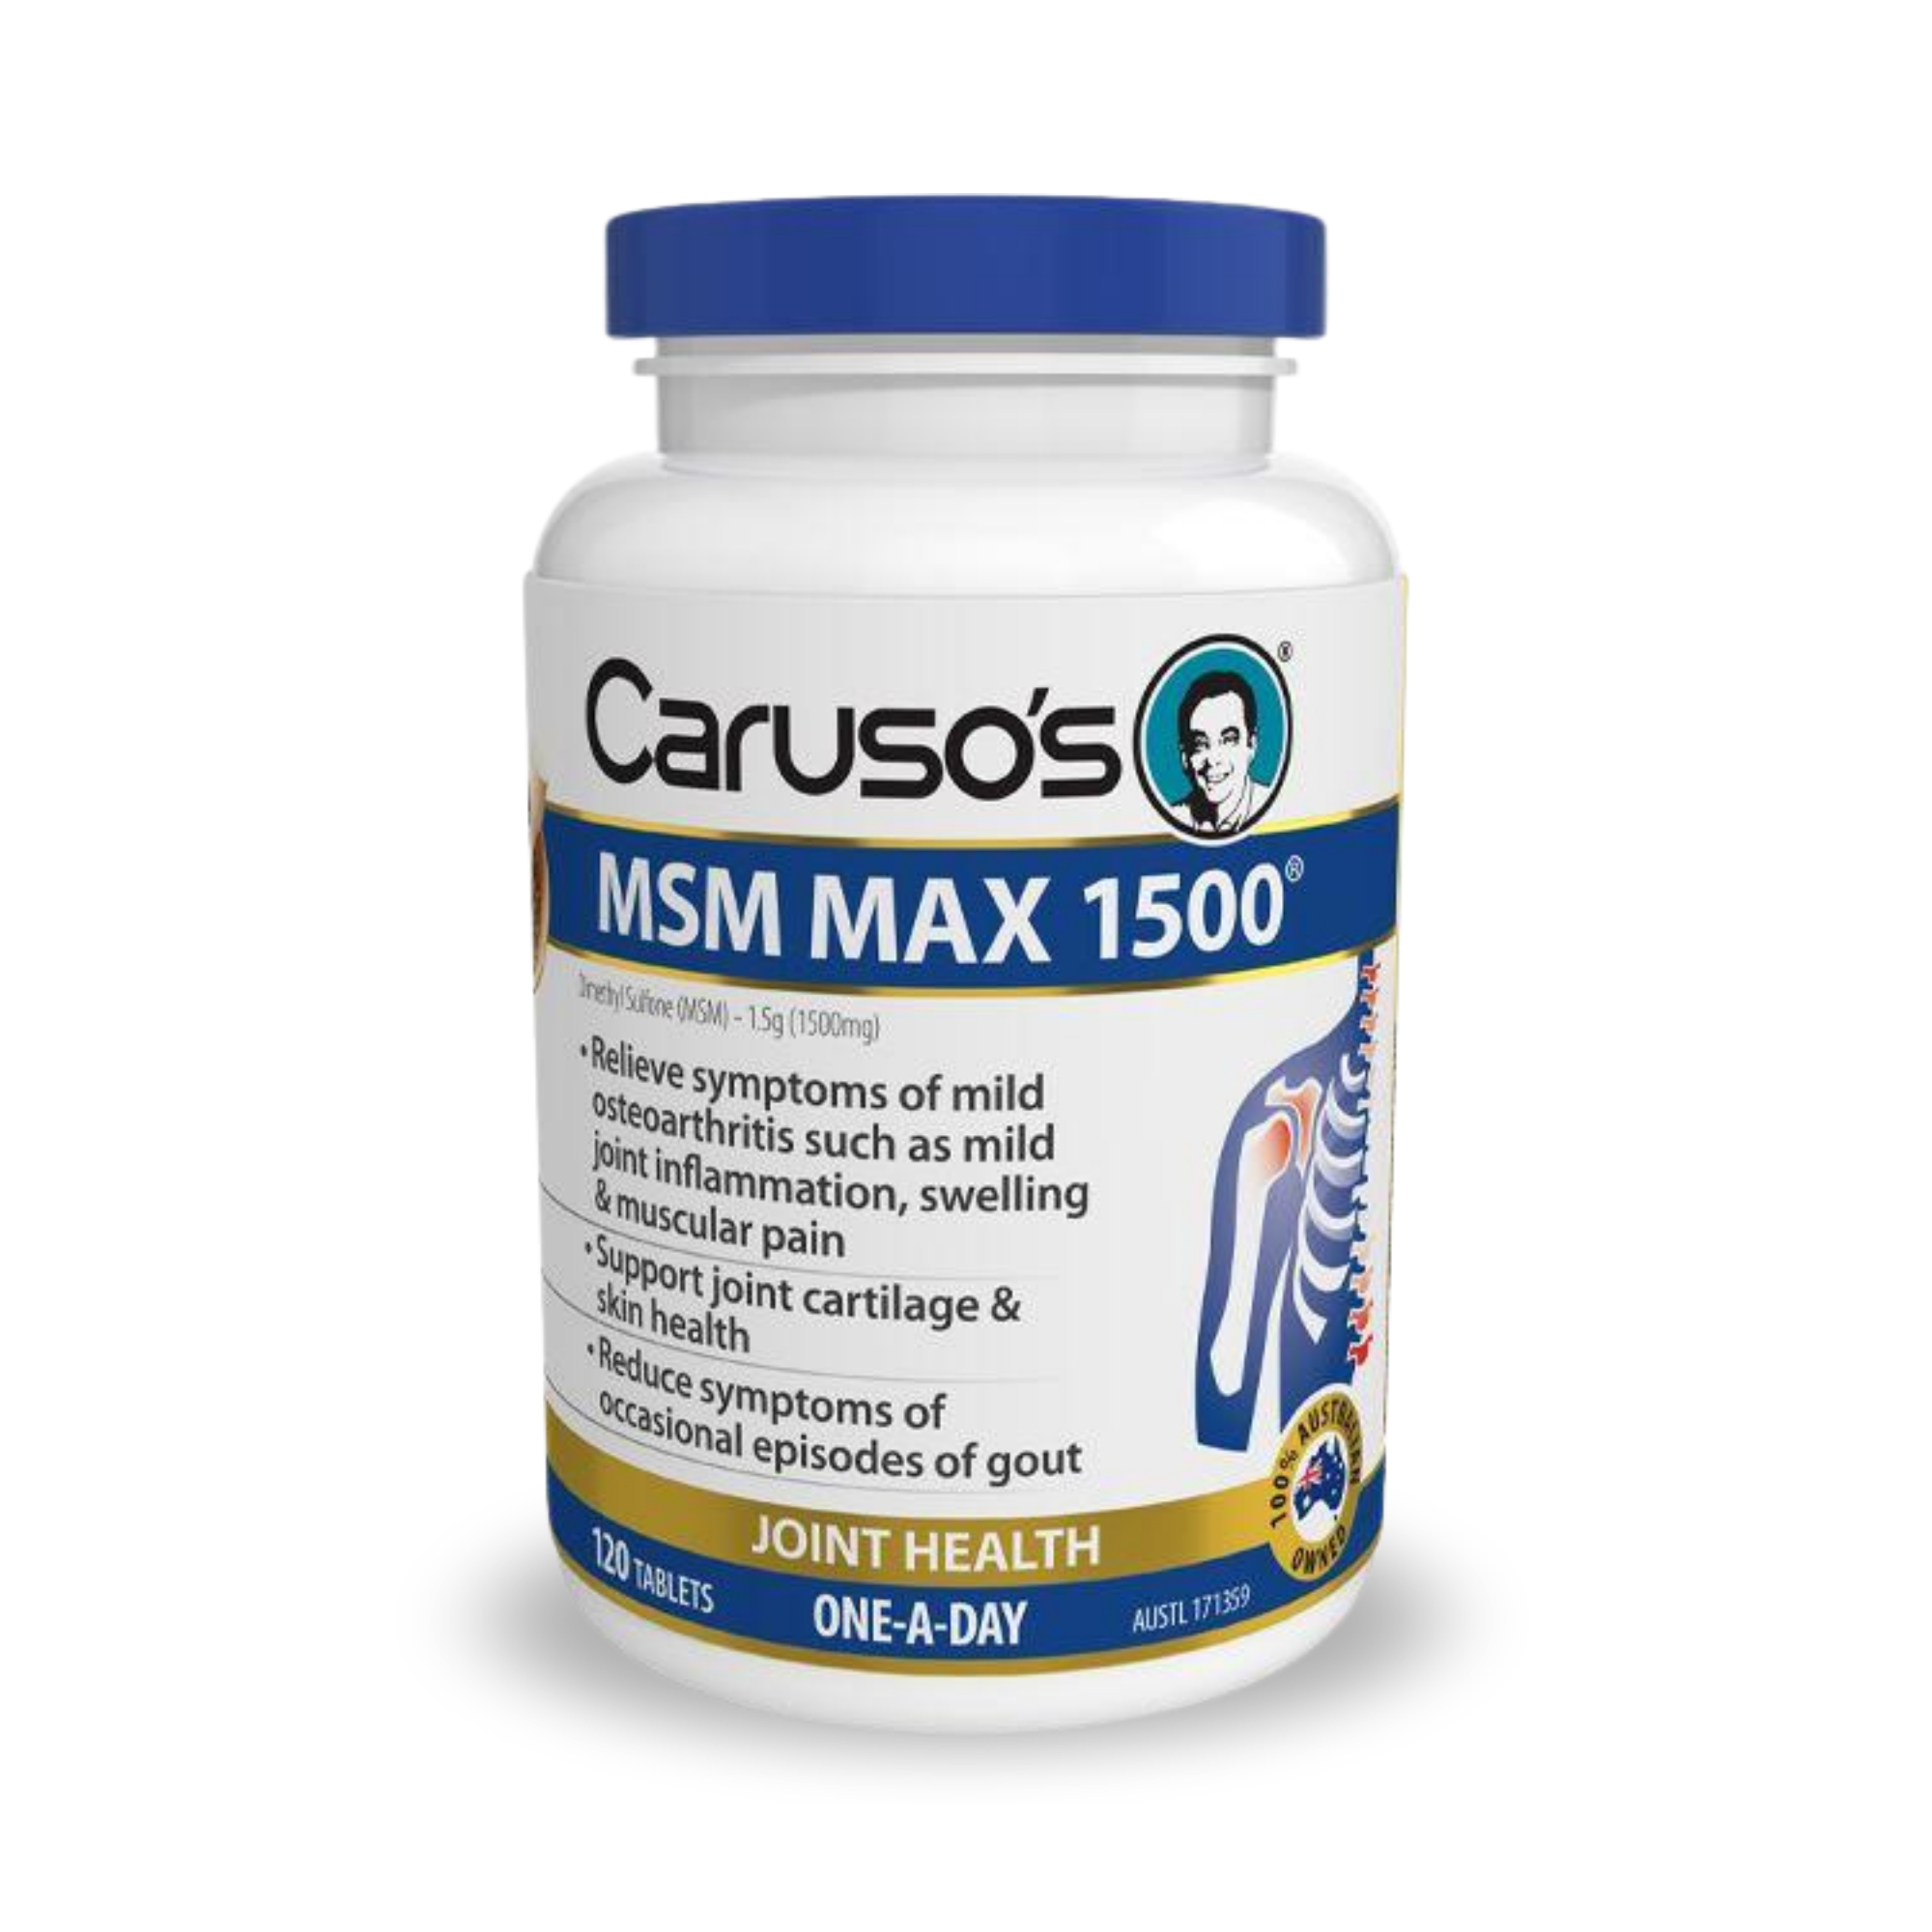 Carusos Msm Max 1500mg 120 Tablets